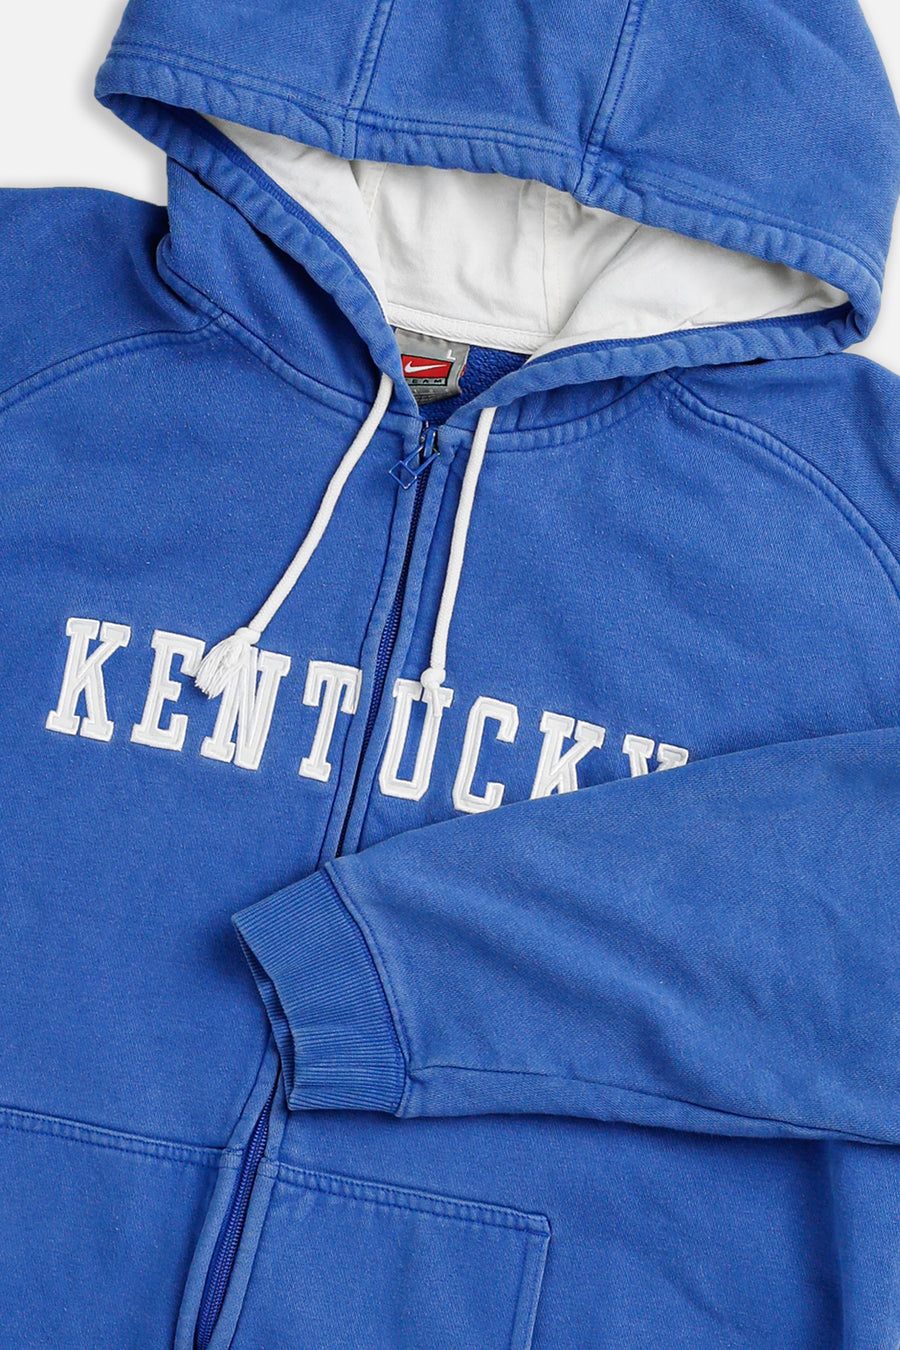 Vintage Kentucky Nike Team Sweatshirt - L